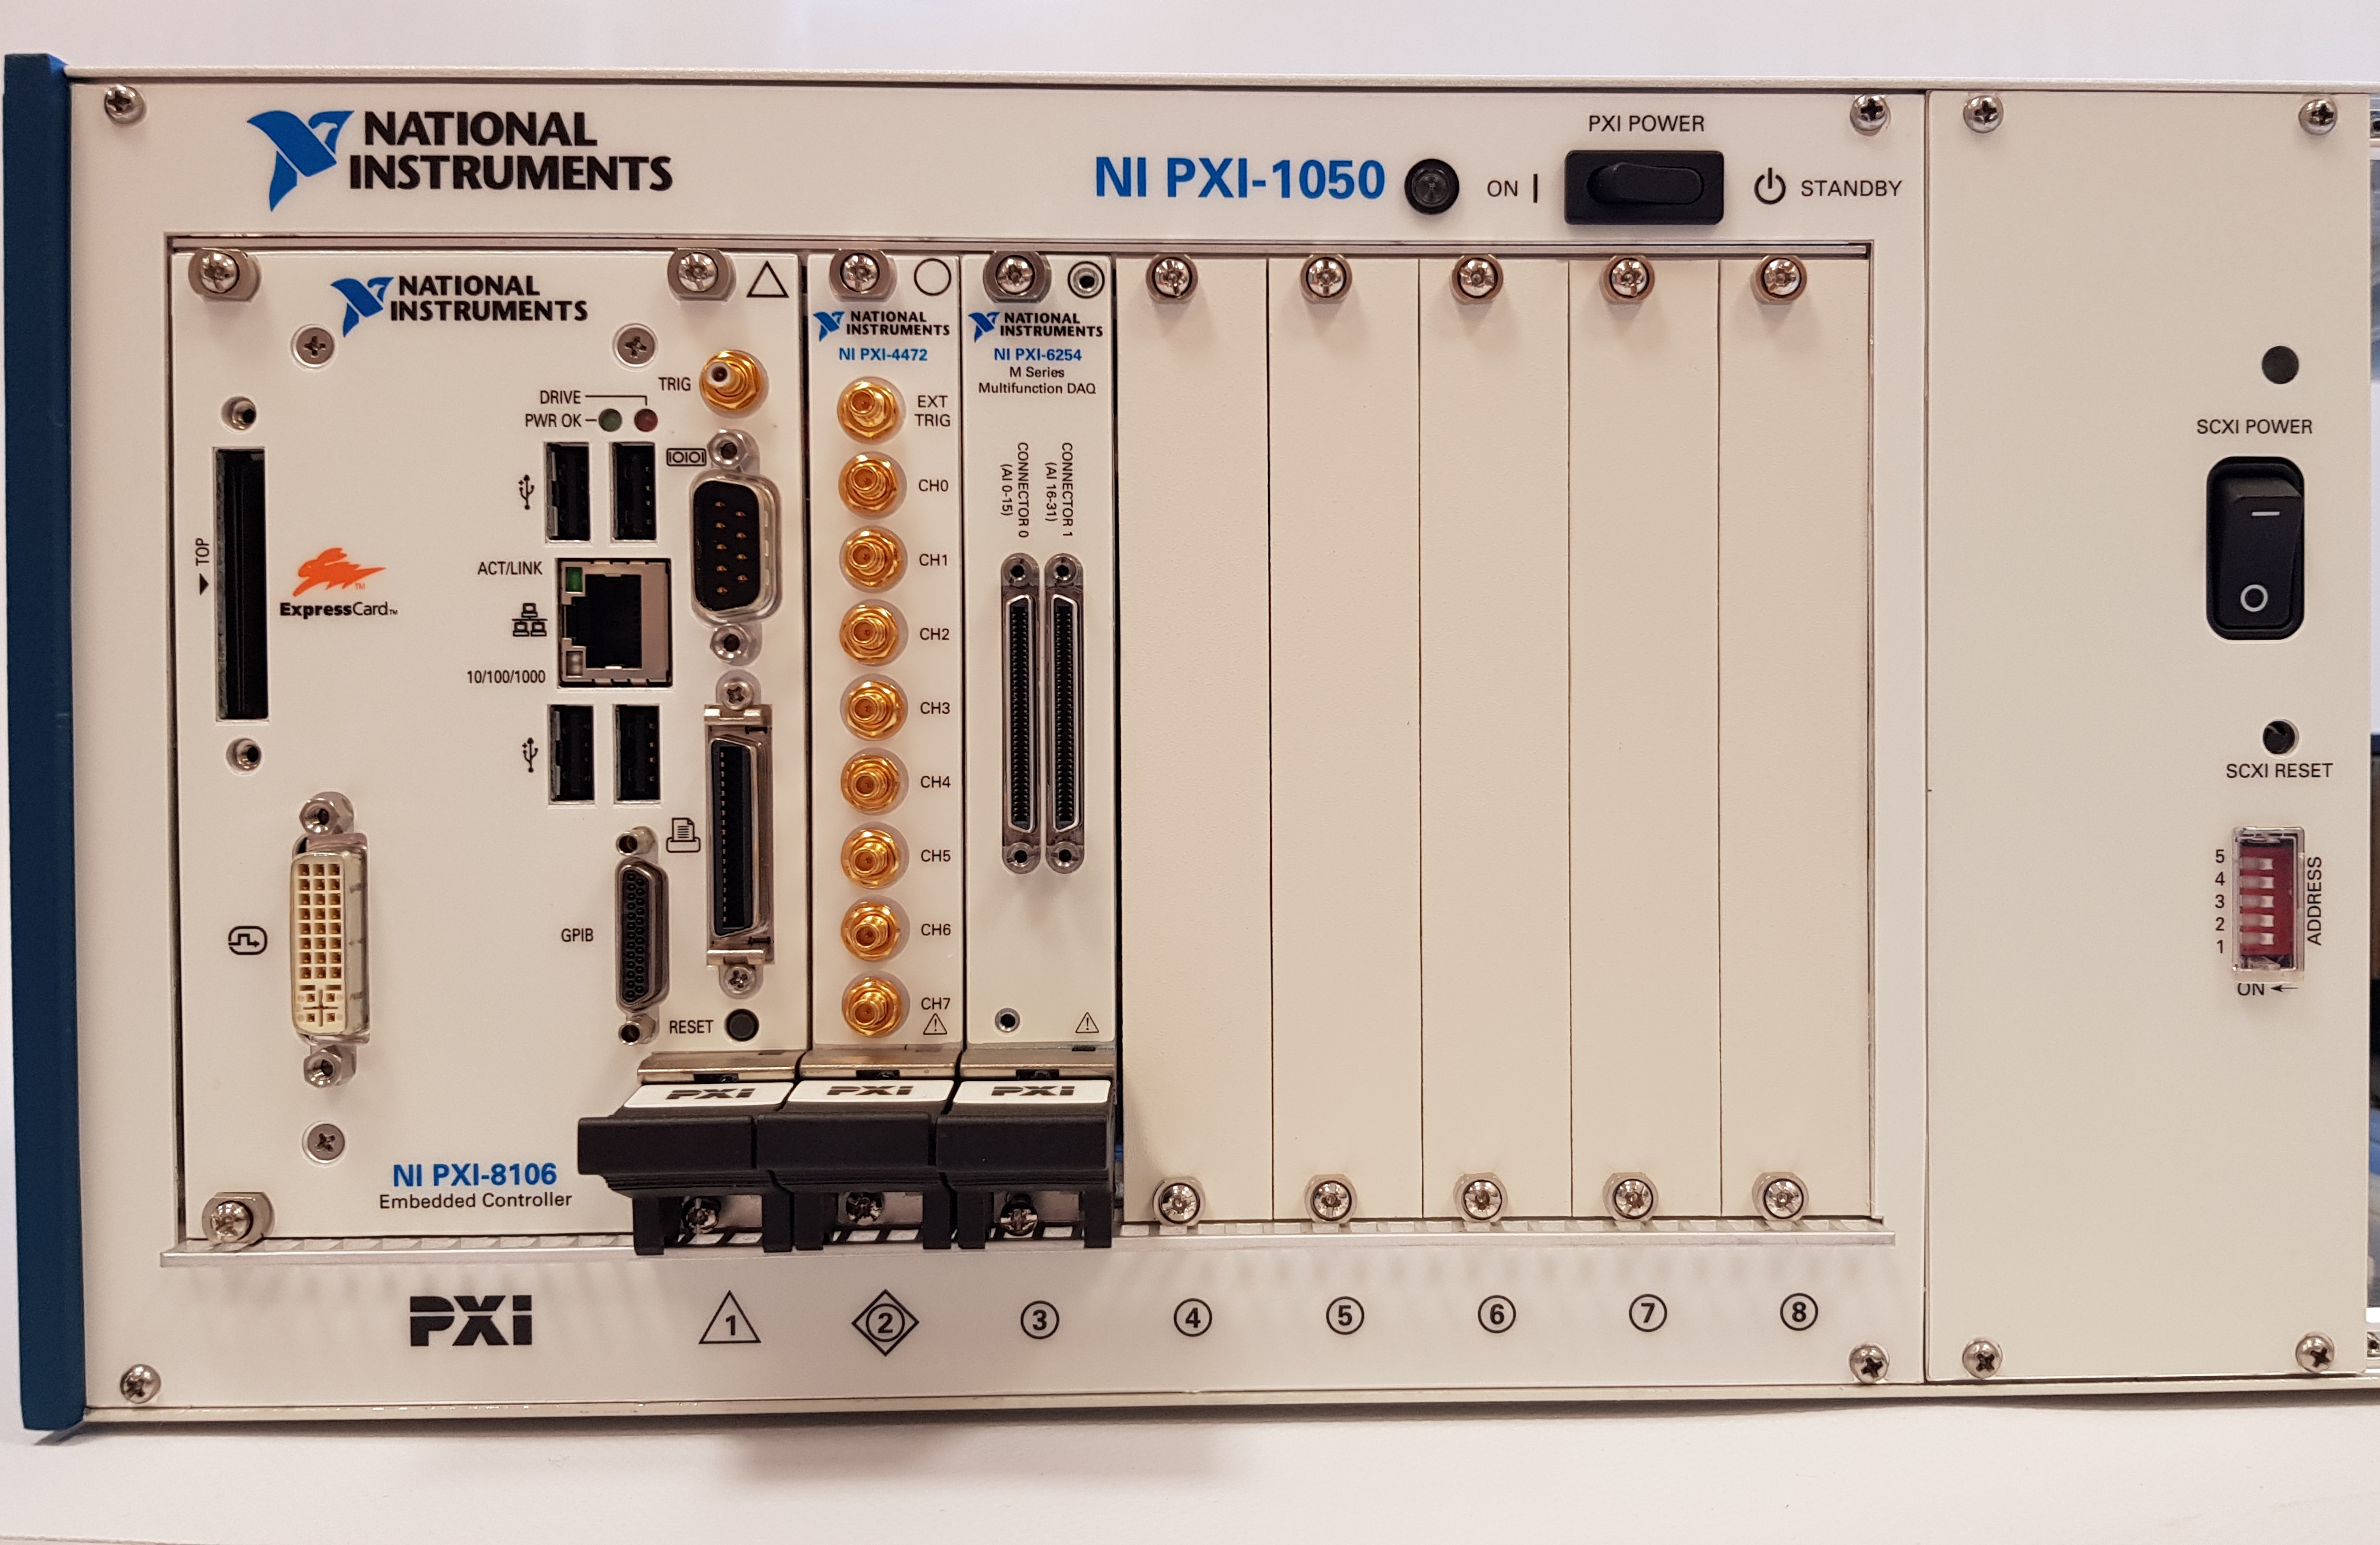 PXI platform based on PC of National Instruments